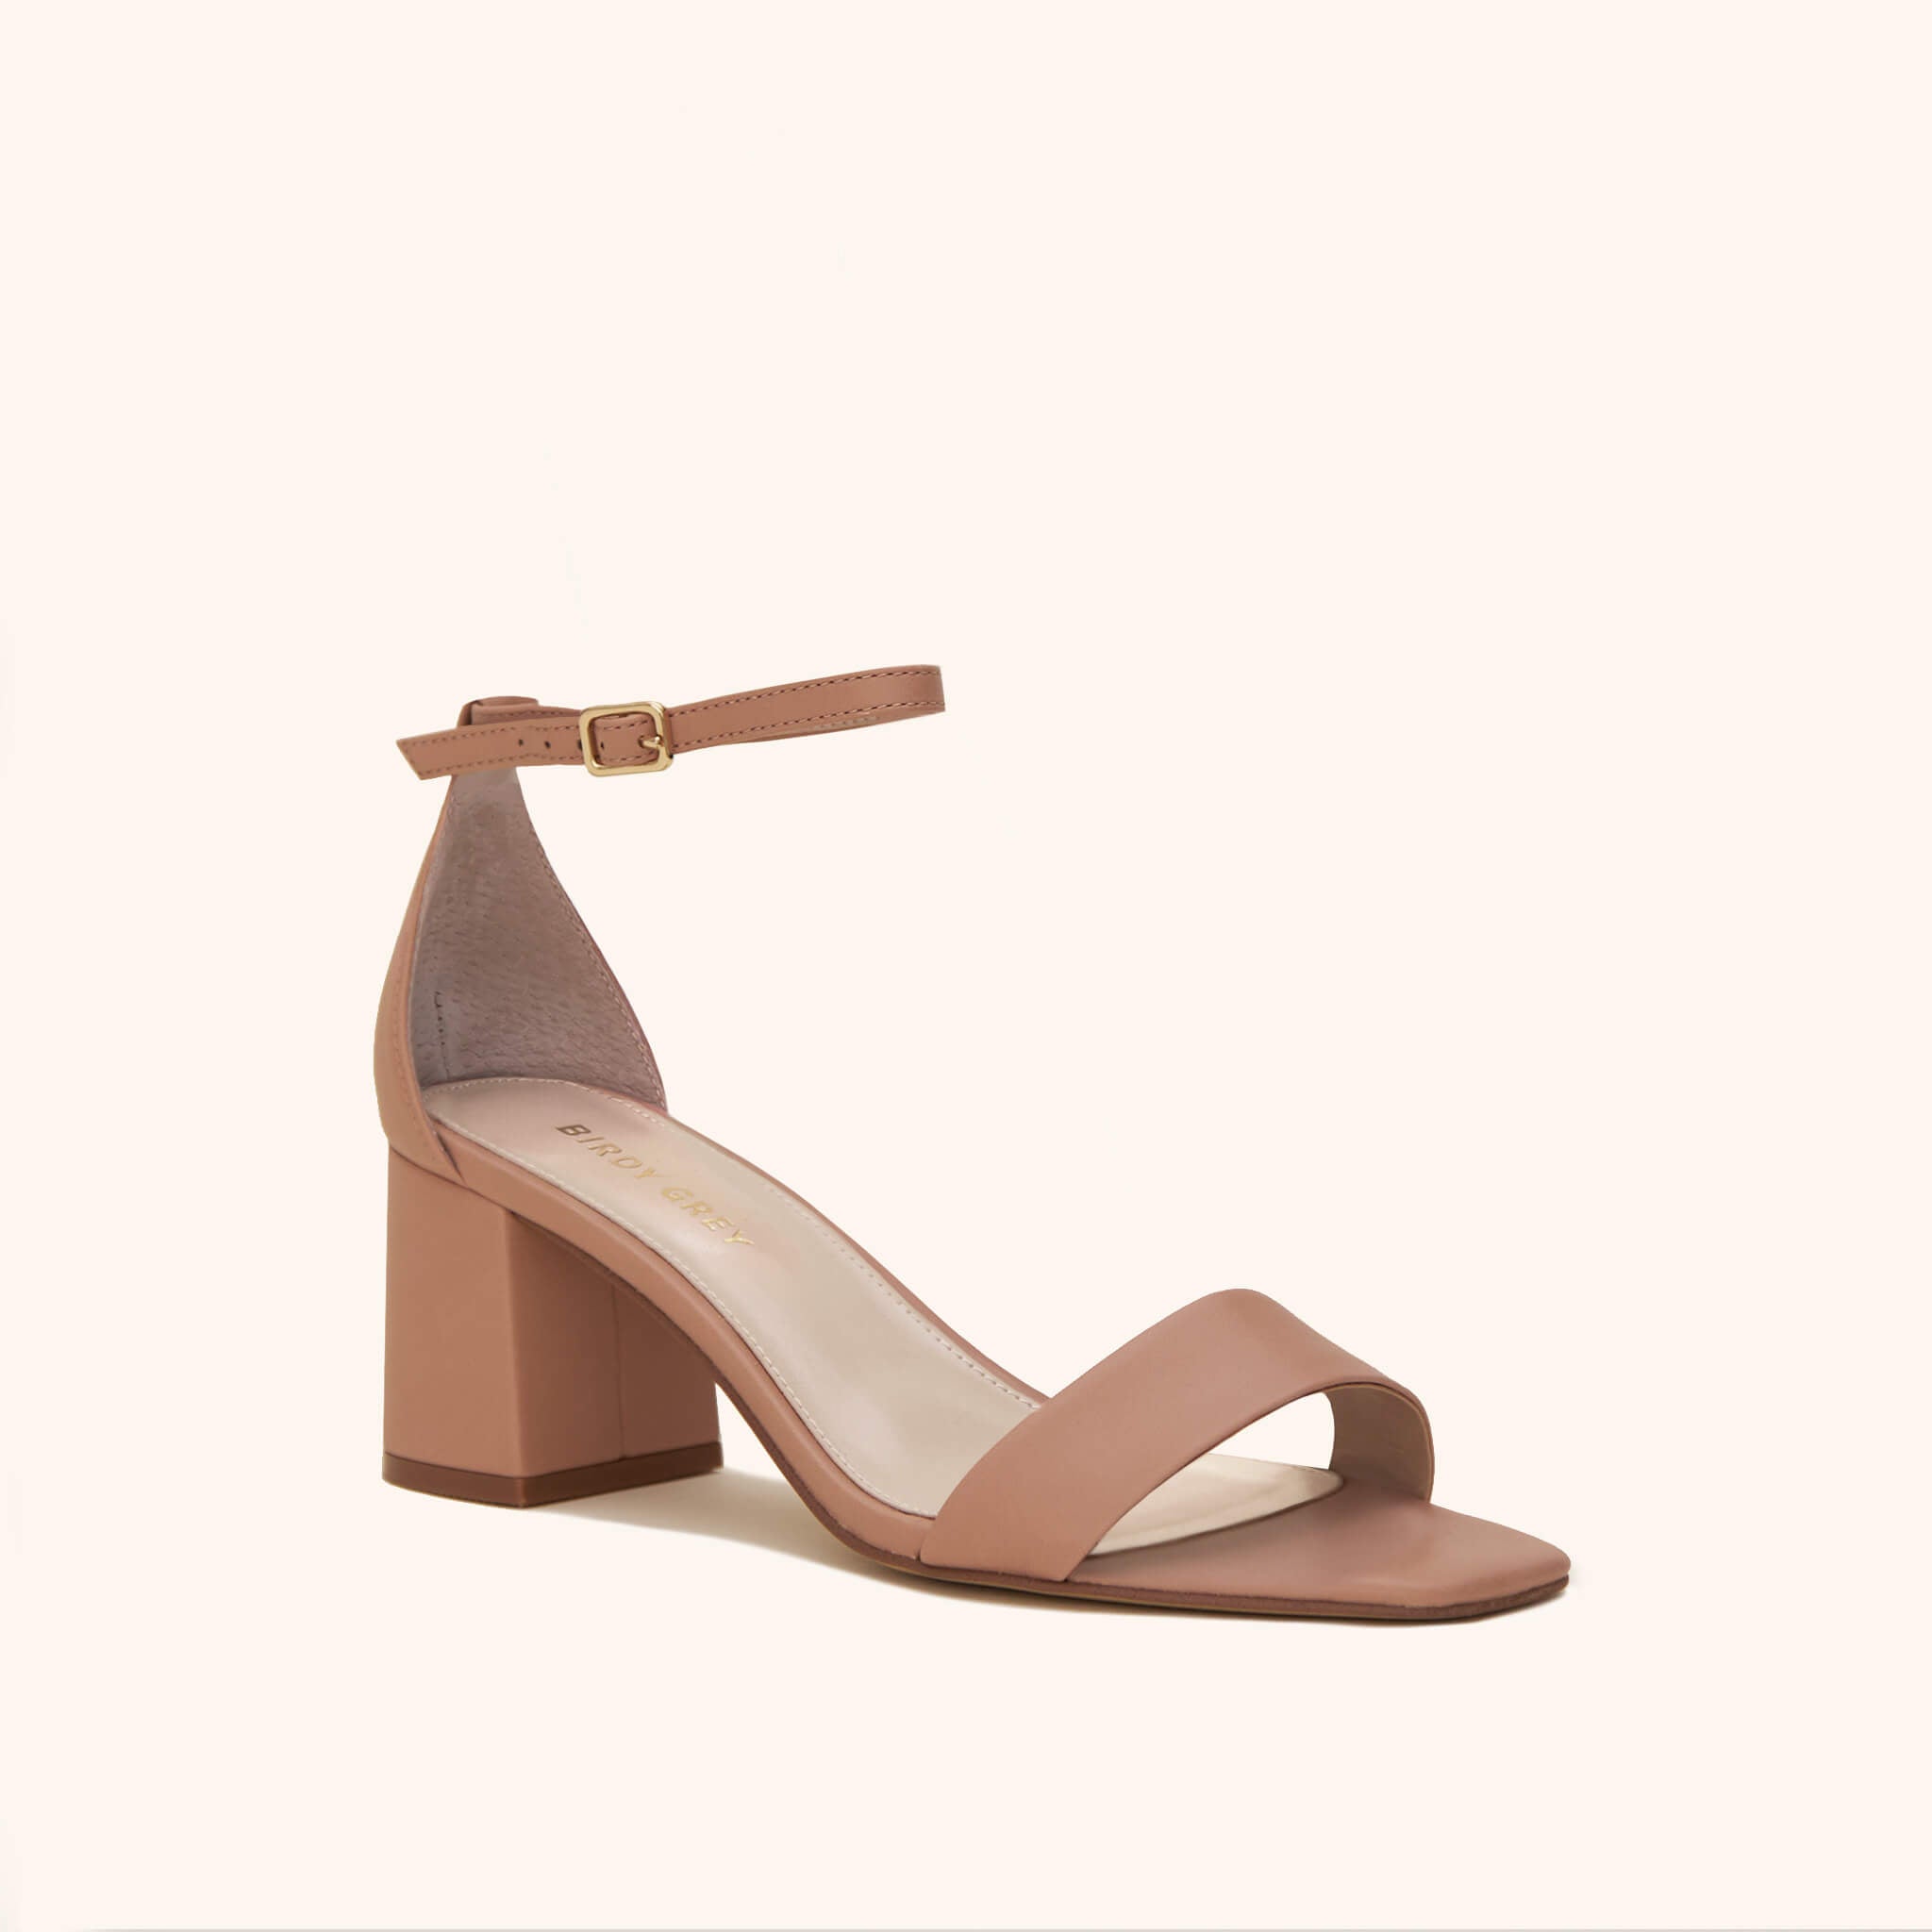 Natalie chunky heel in mocha by Birdy Grey, side view